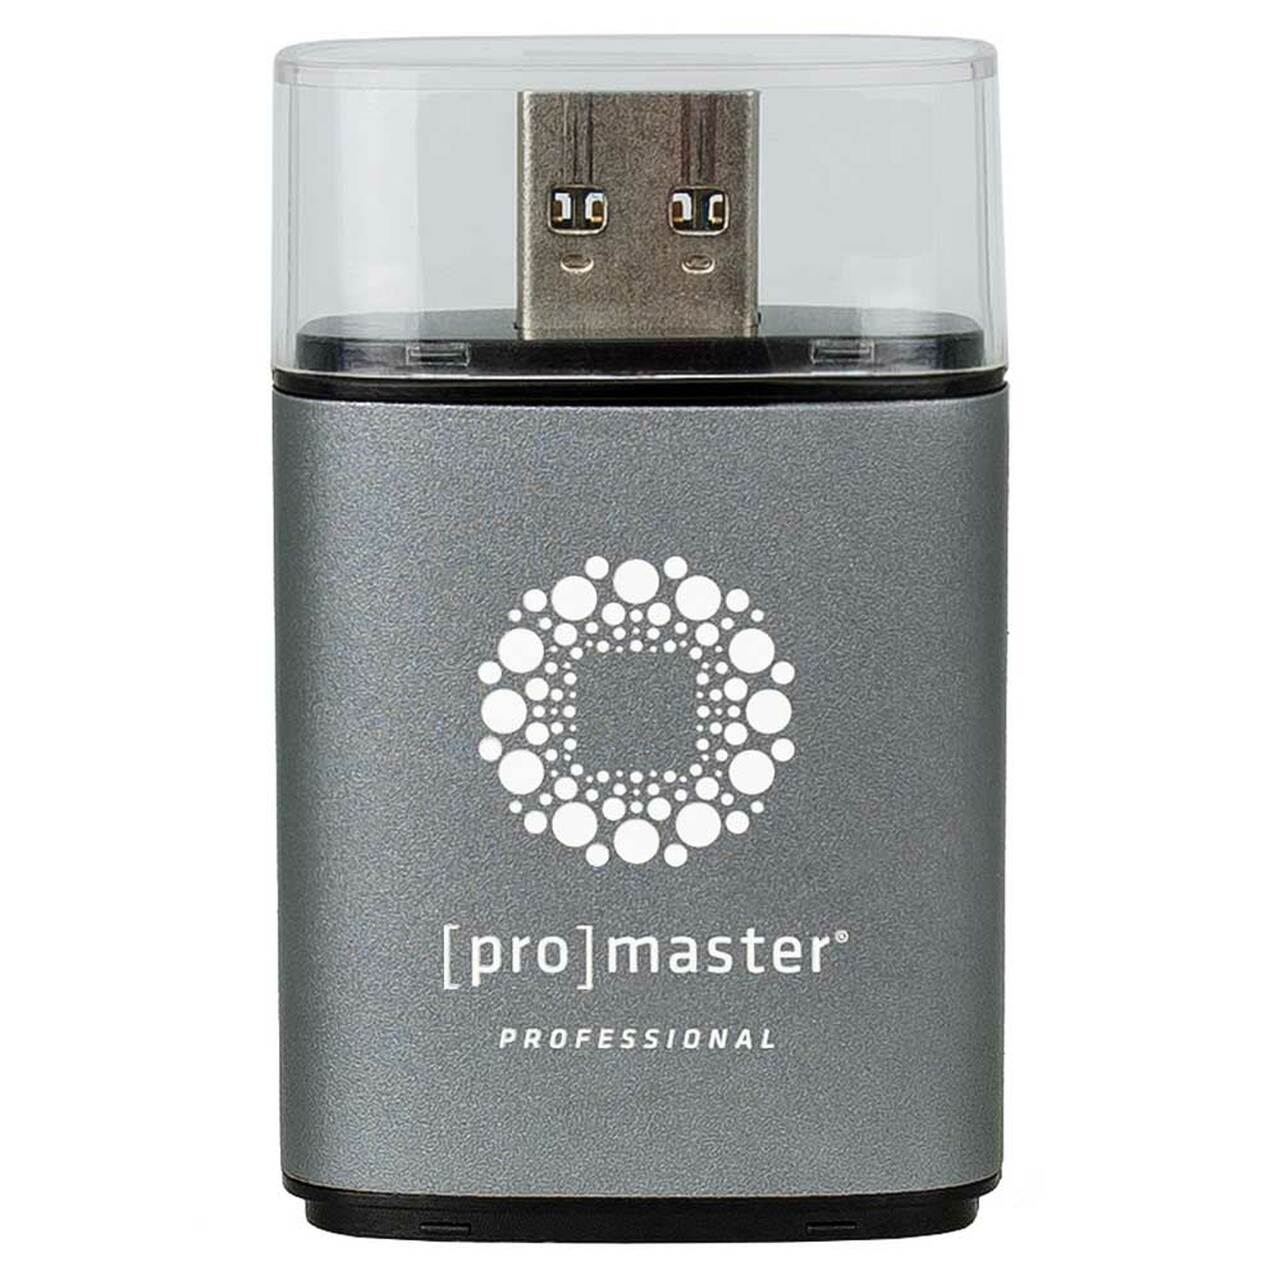 Promaster 6691 USB 3.0 SD UHSII Card Reader - dual slot SD